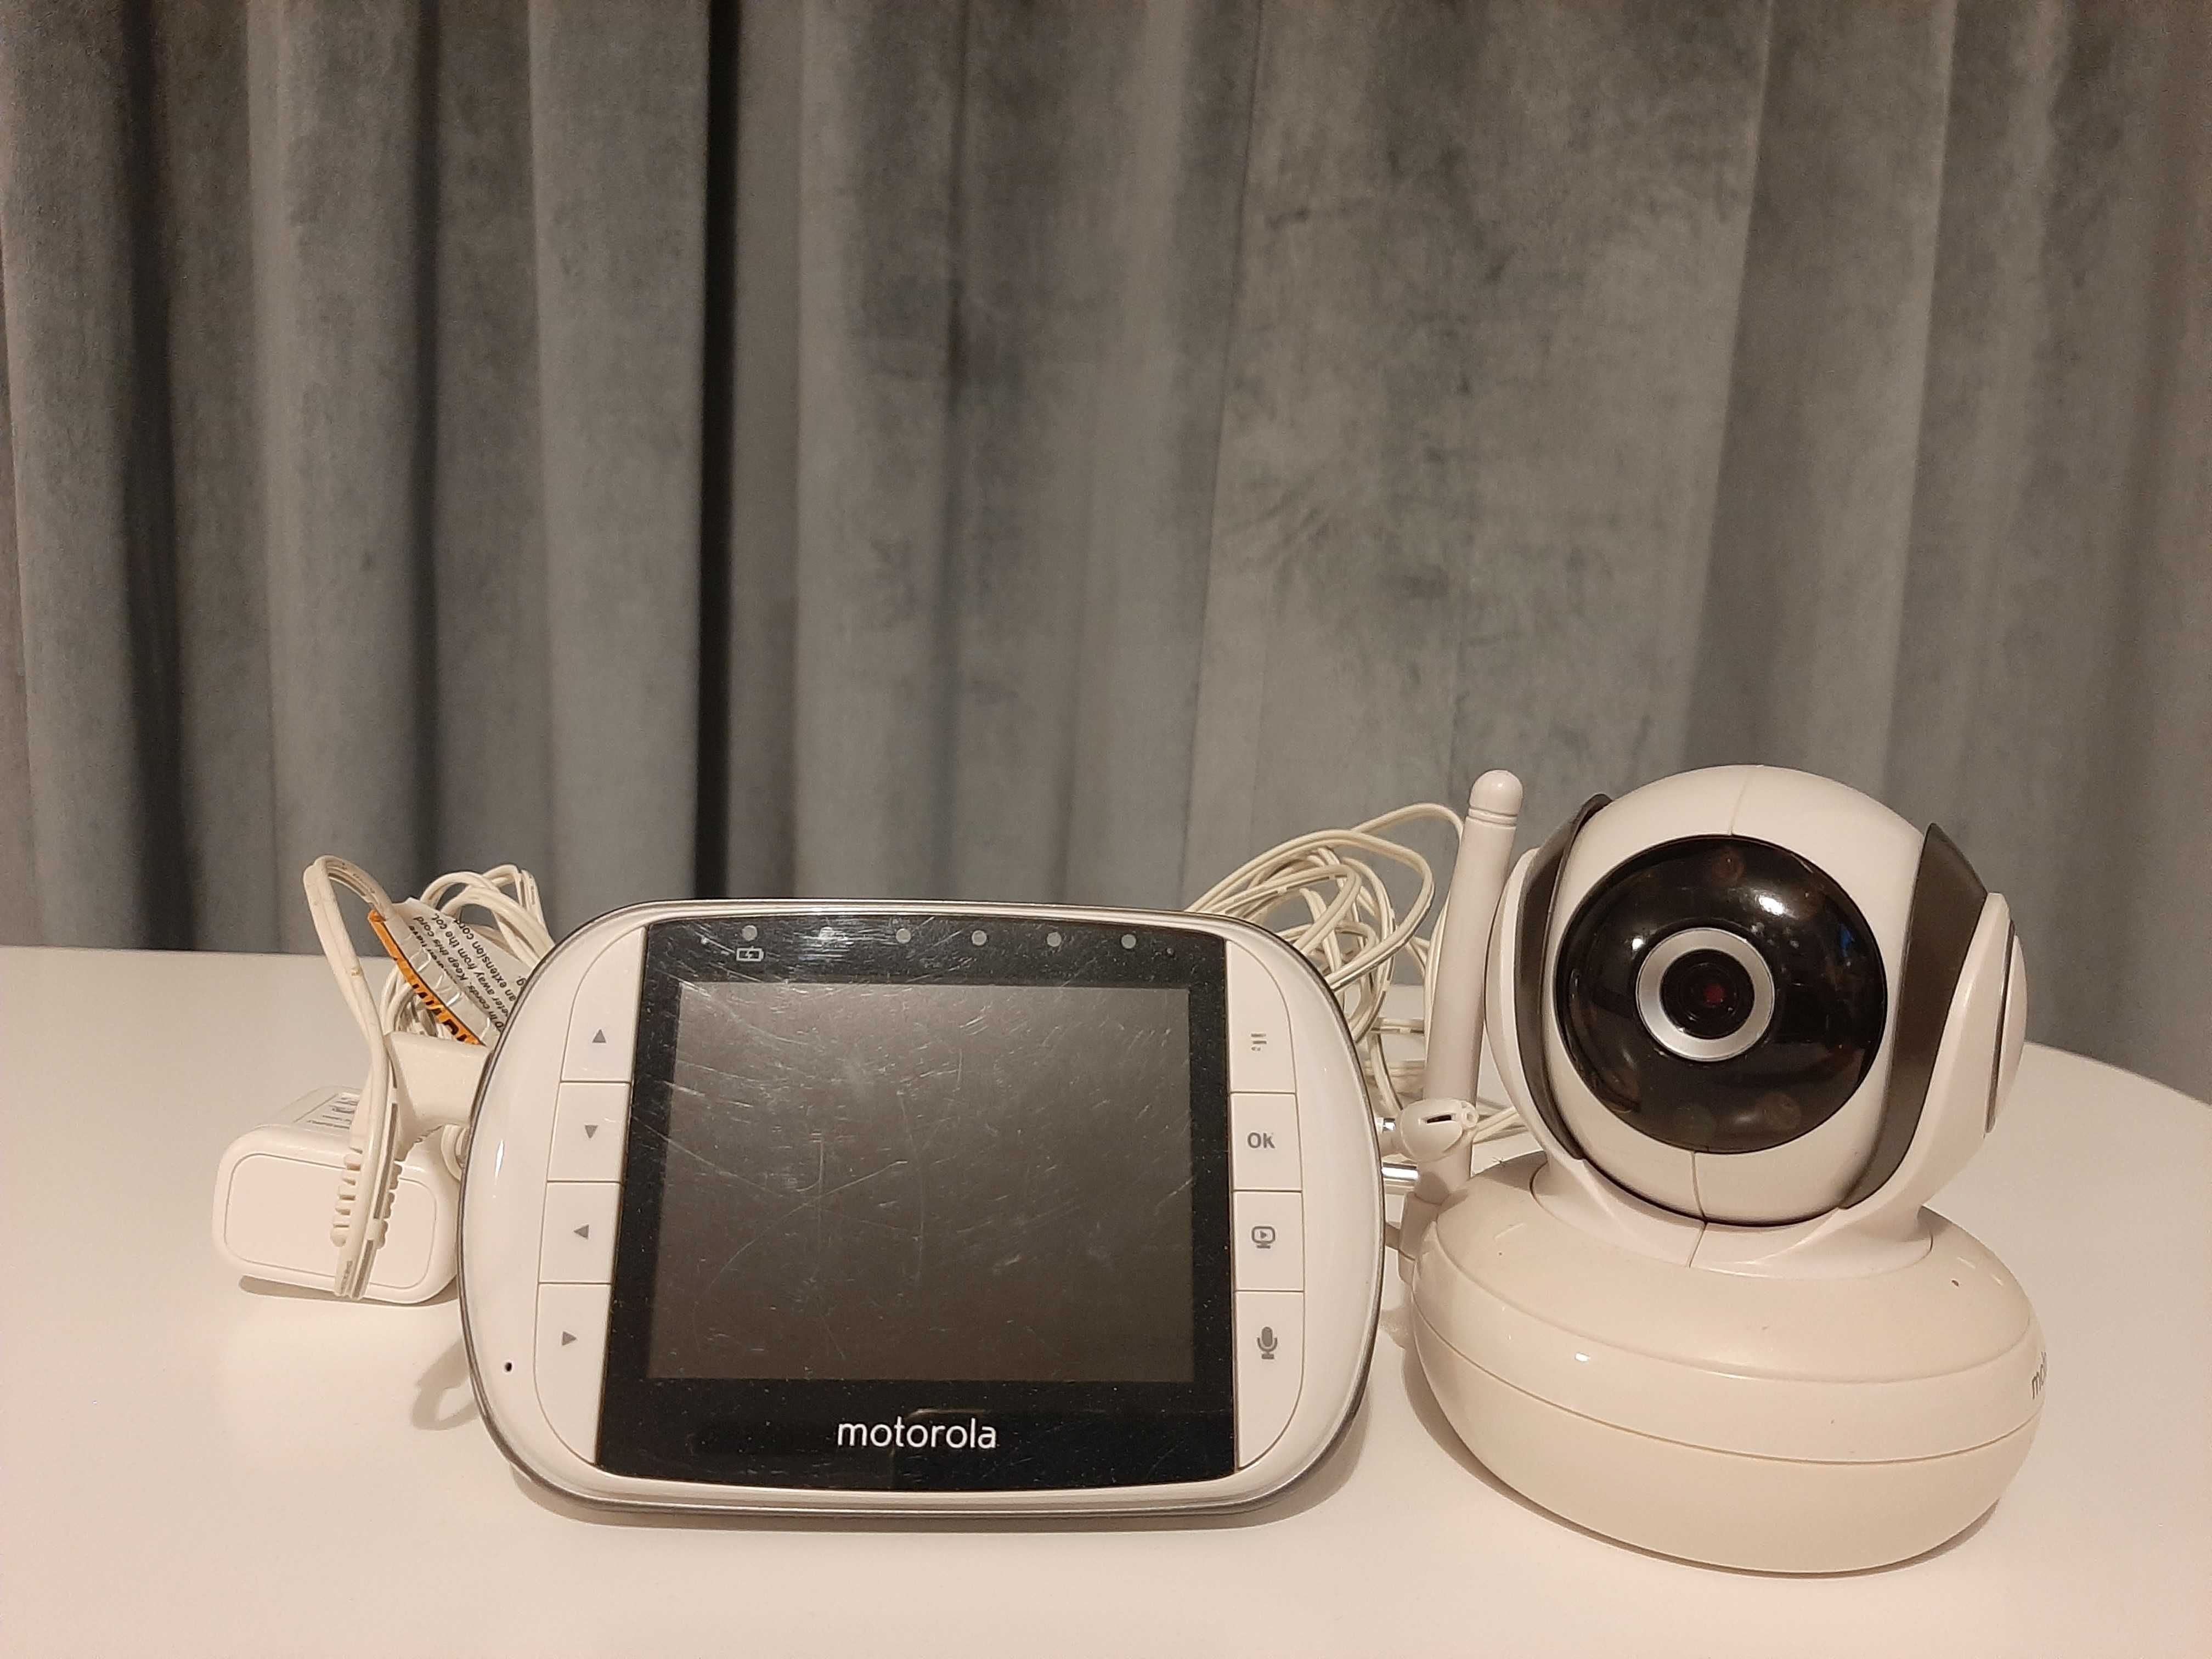 Sistem Motorola pentru monitorizare bebe